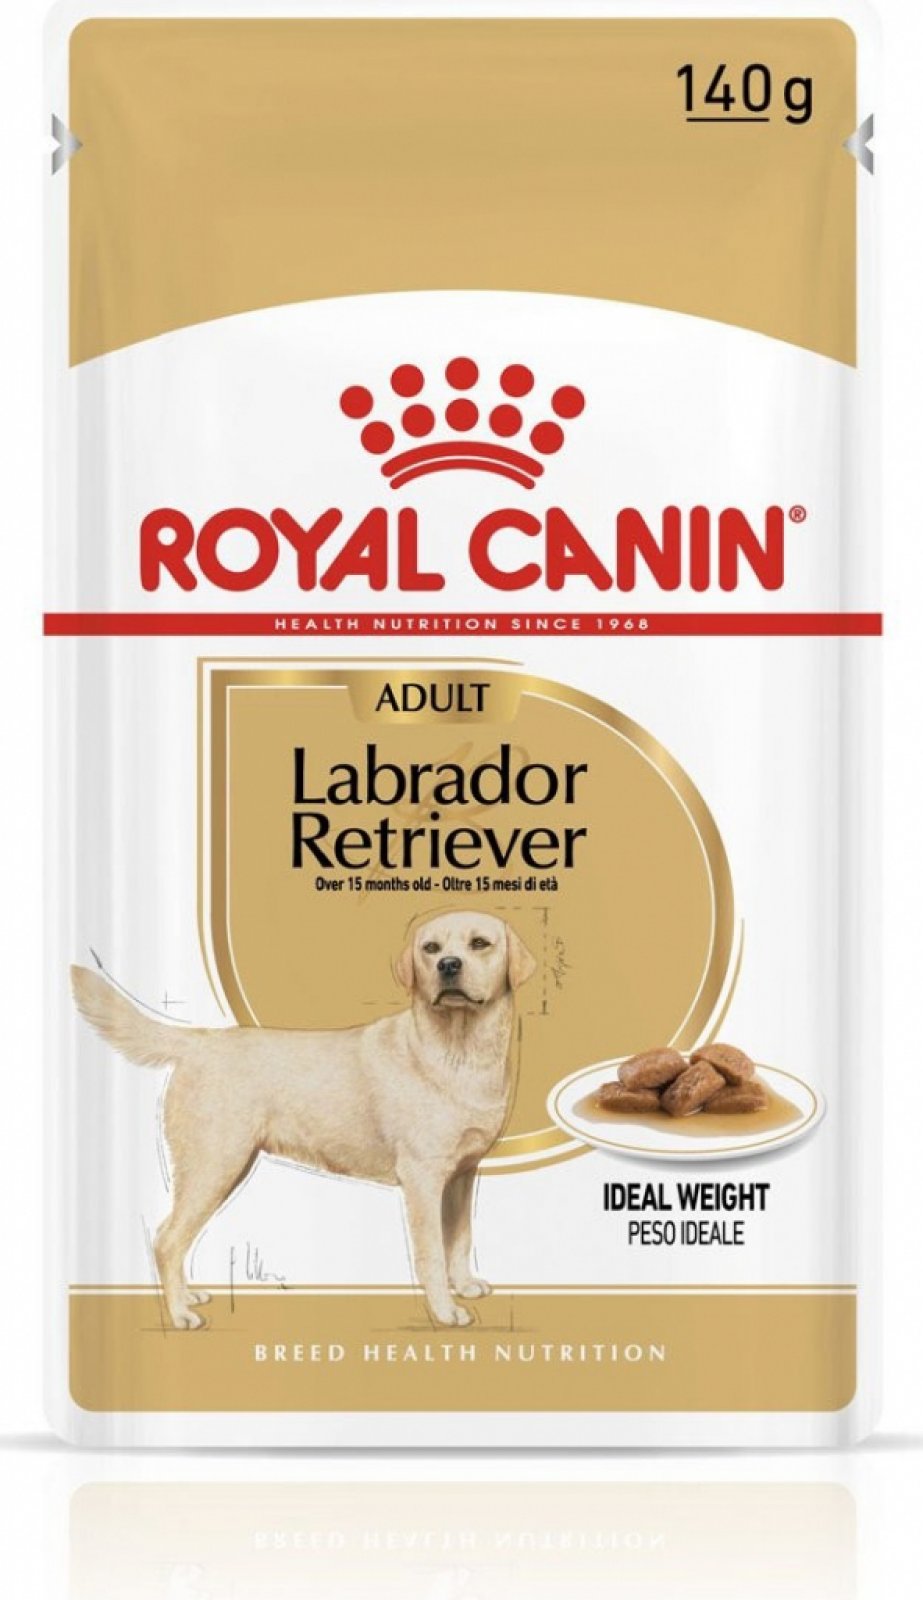 Royal Canin Labrador Retriever Adult pouch 10x140g